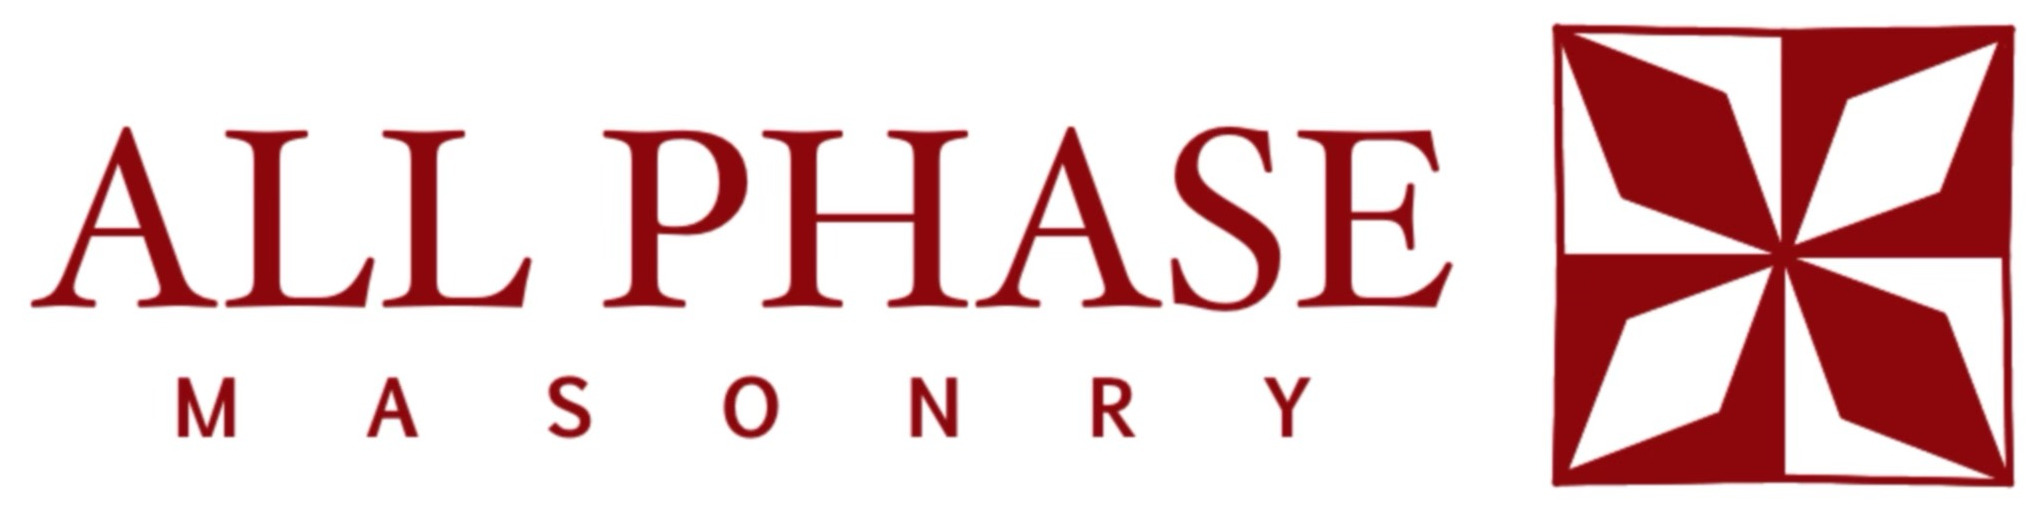 All Phase Masonry Logo